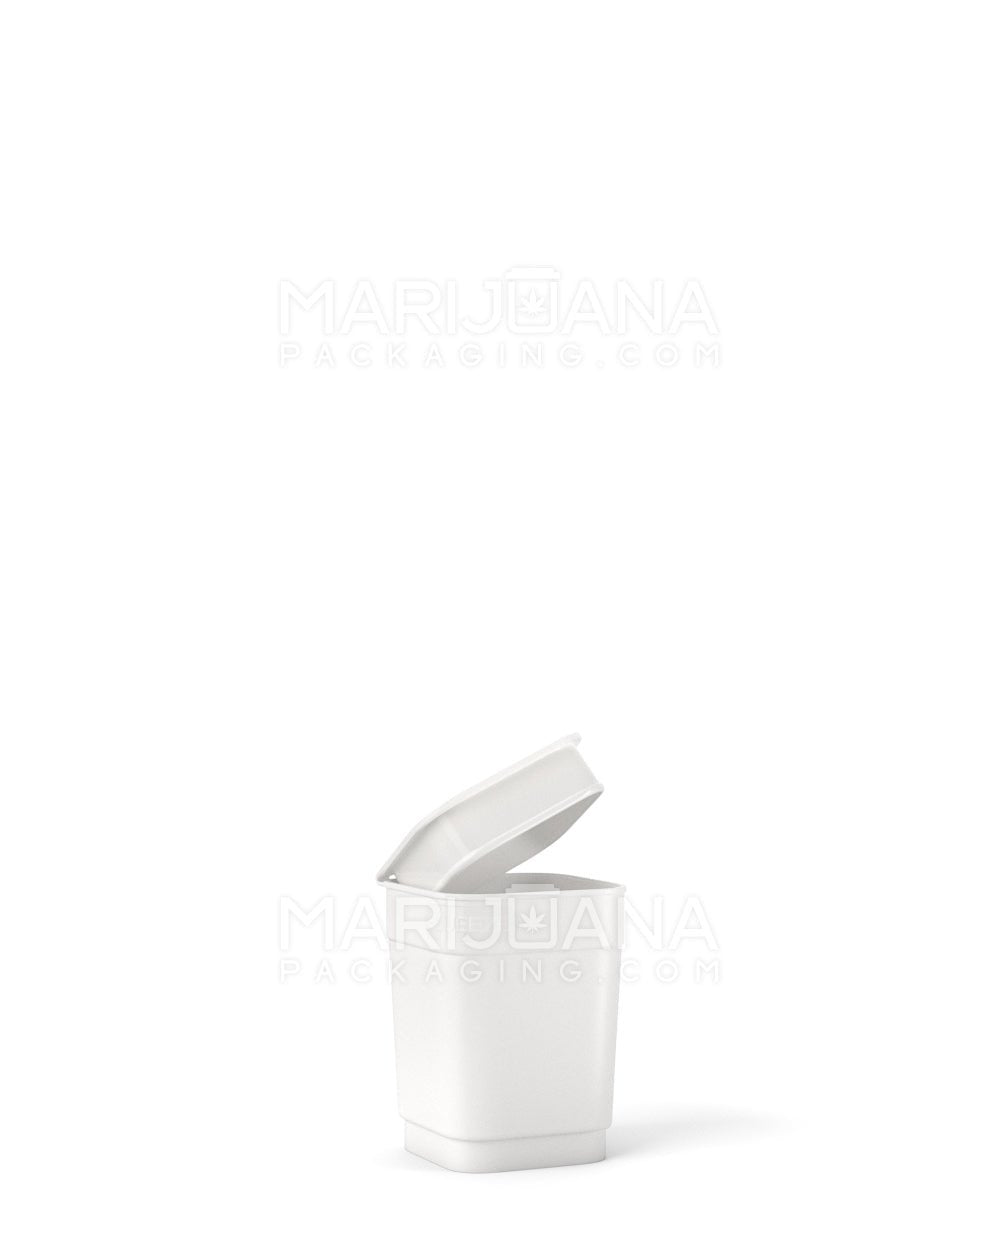 POLLEN GEAR | 100% Recyclable Opaque White Pop Box Pop Top Bottles | 6dr - 1g - 1632 Count - 3